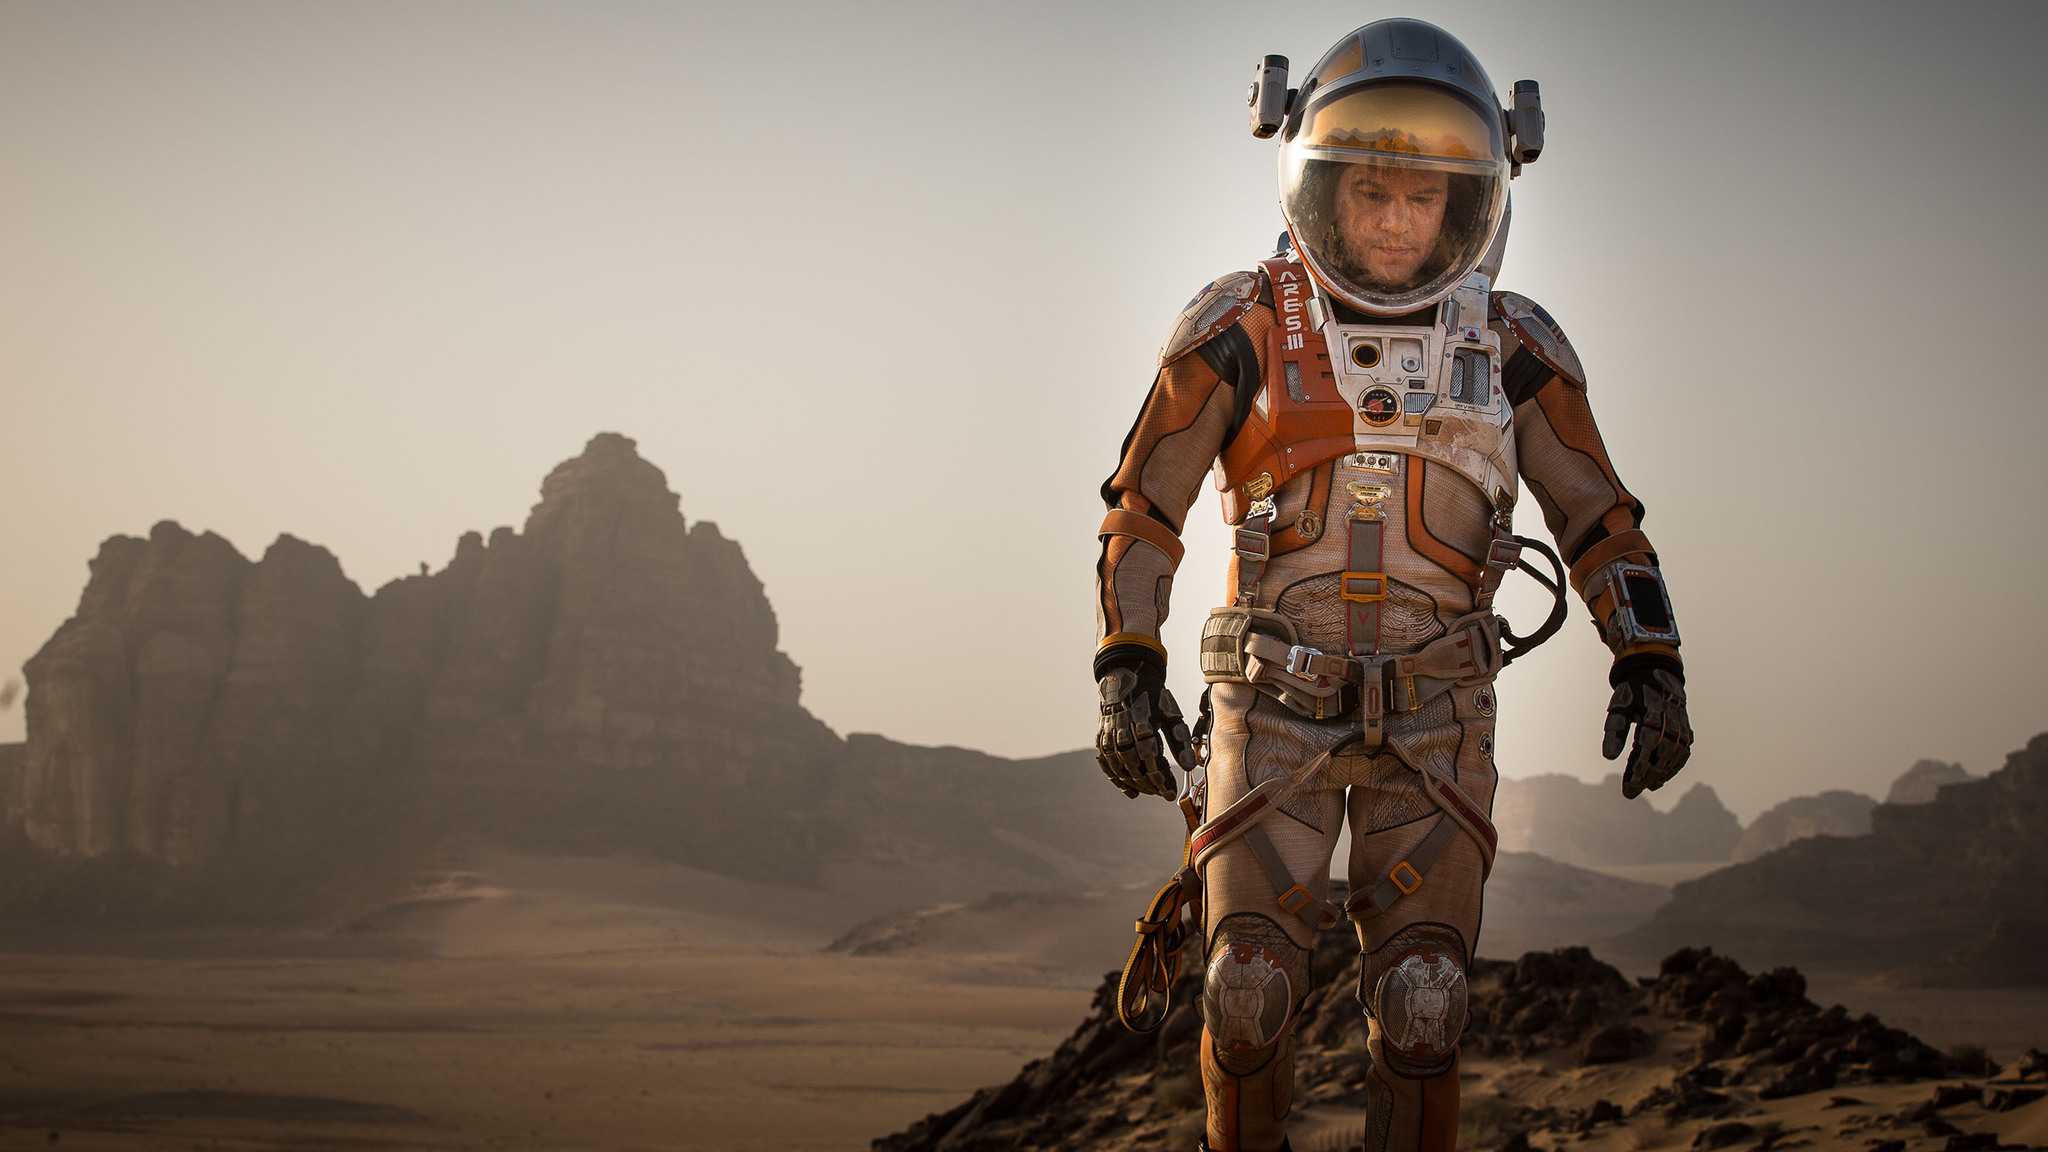 The Martian (2015) (Source: IMDb)